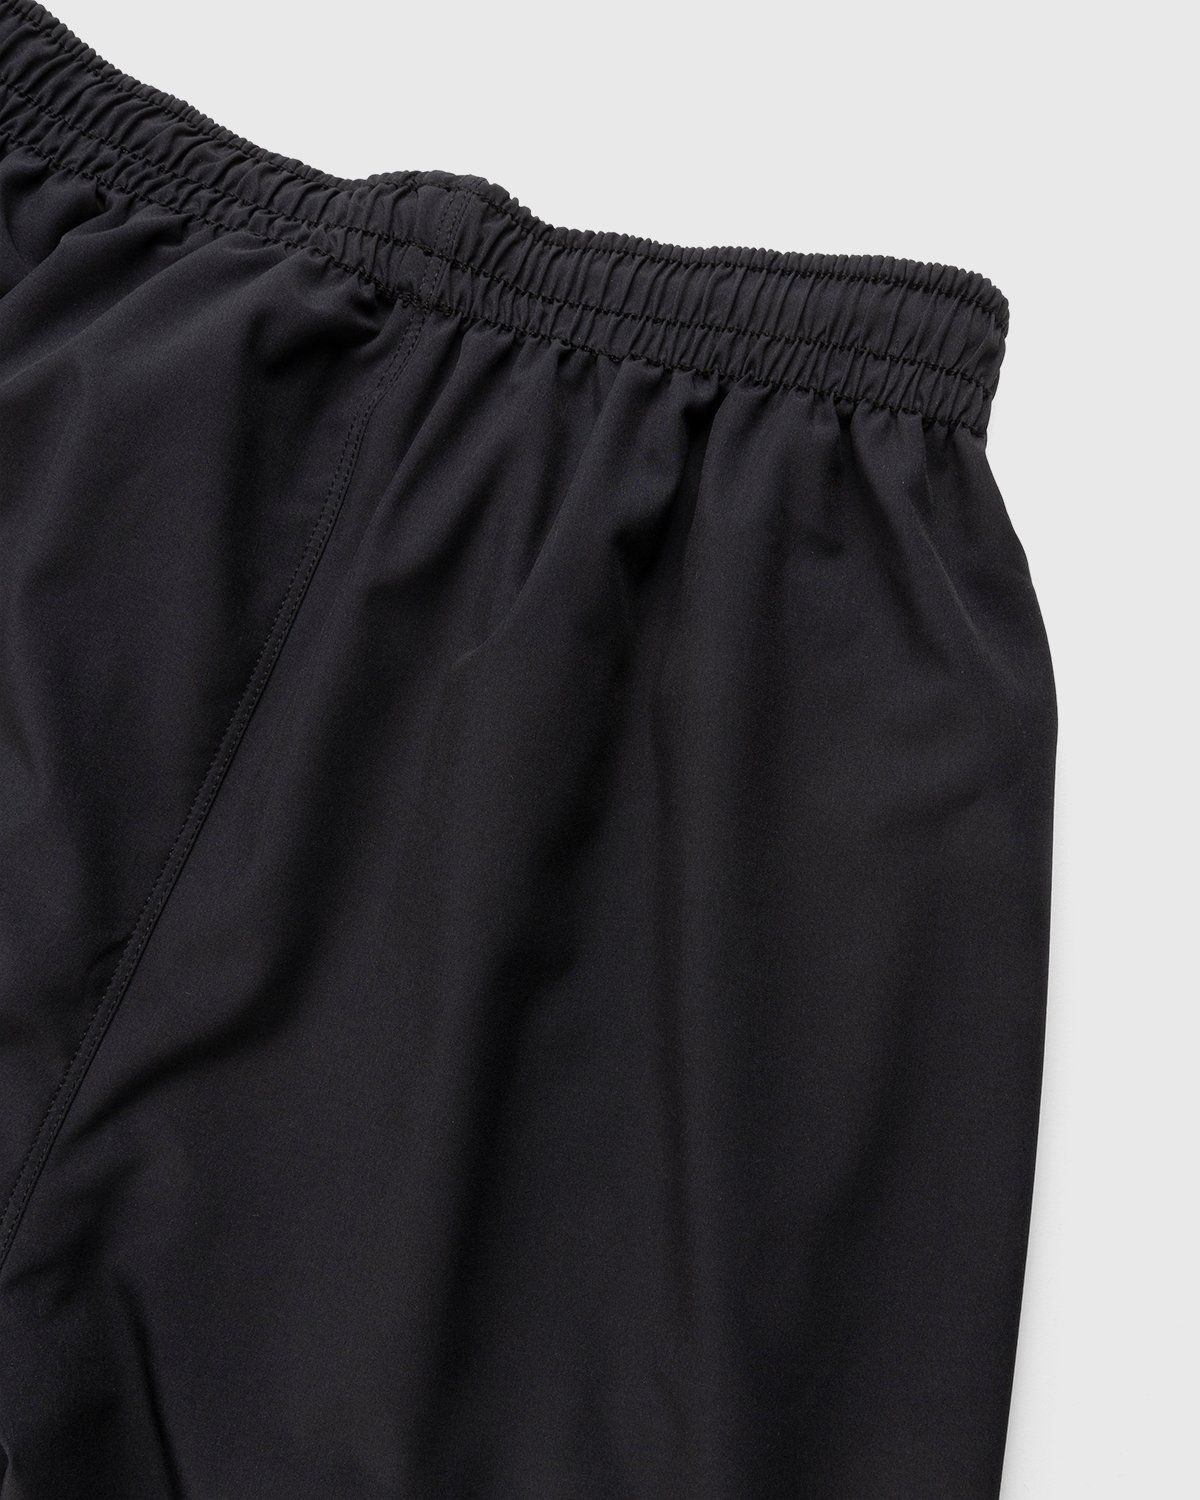 Highsnobiety – HS Sports Reversible Mesh Shorts Black/Khaki - Short Cuts - Green - Image 5